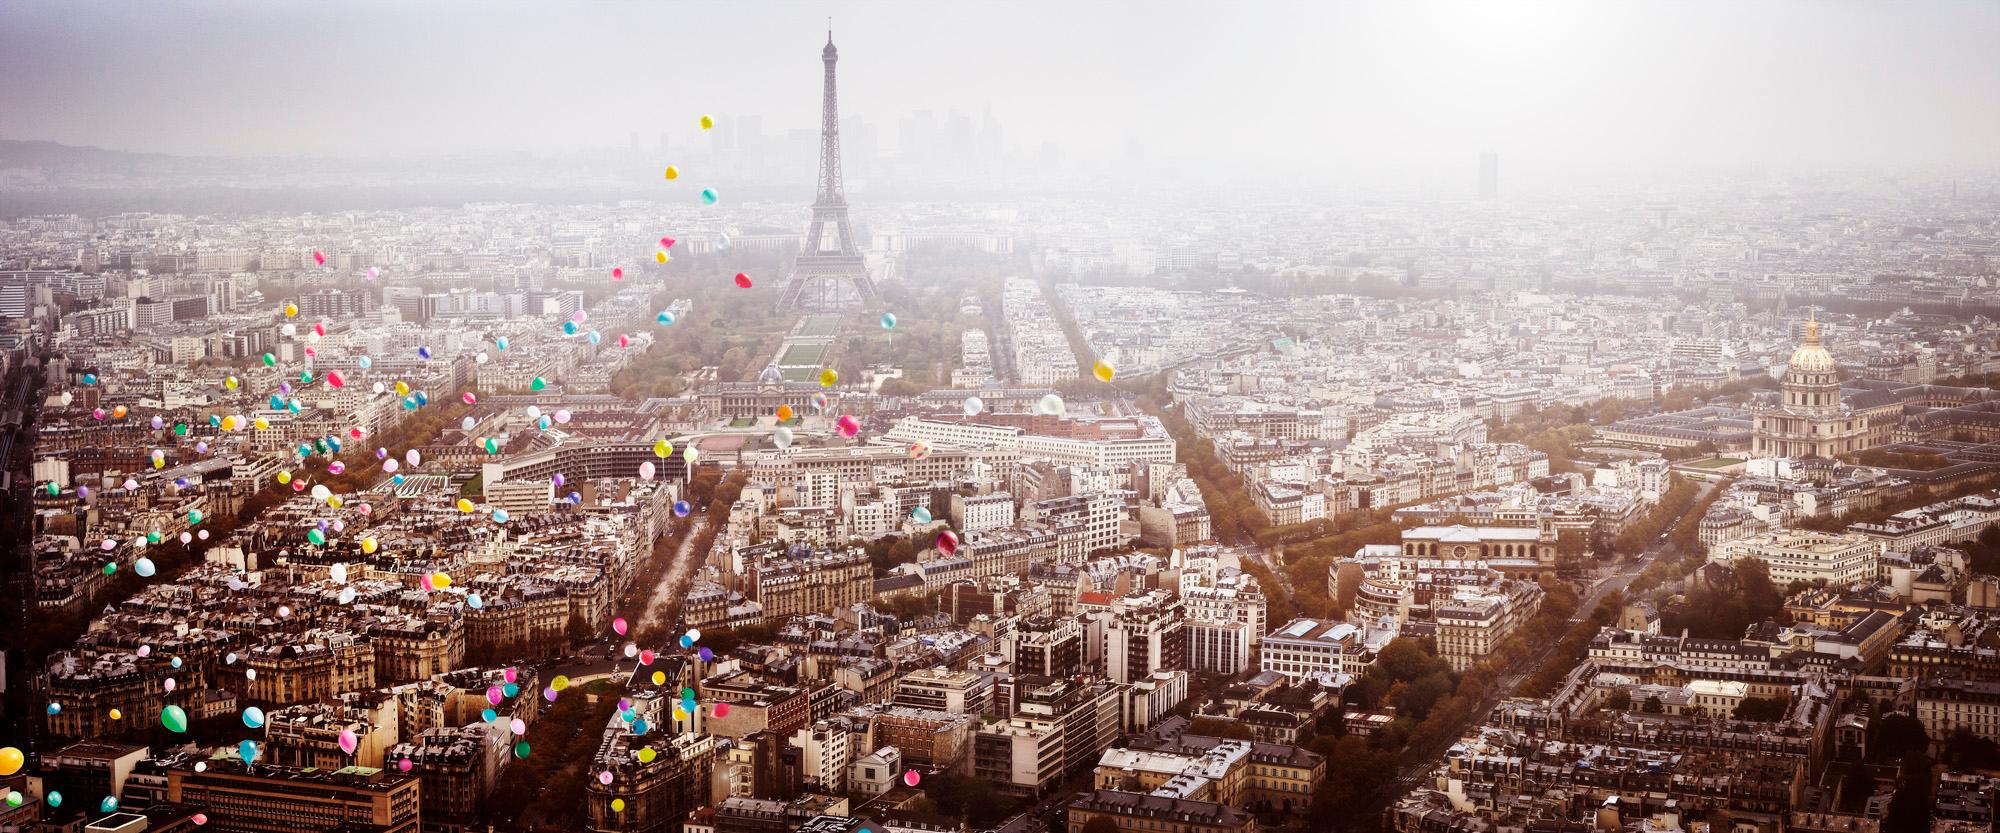 Balloons Over Paris  - Photograph by David Drebin